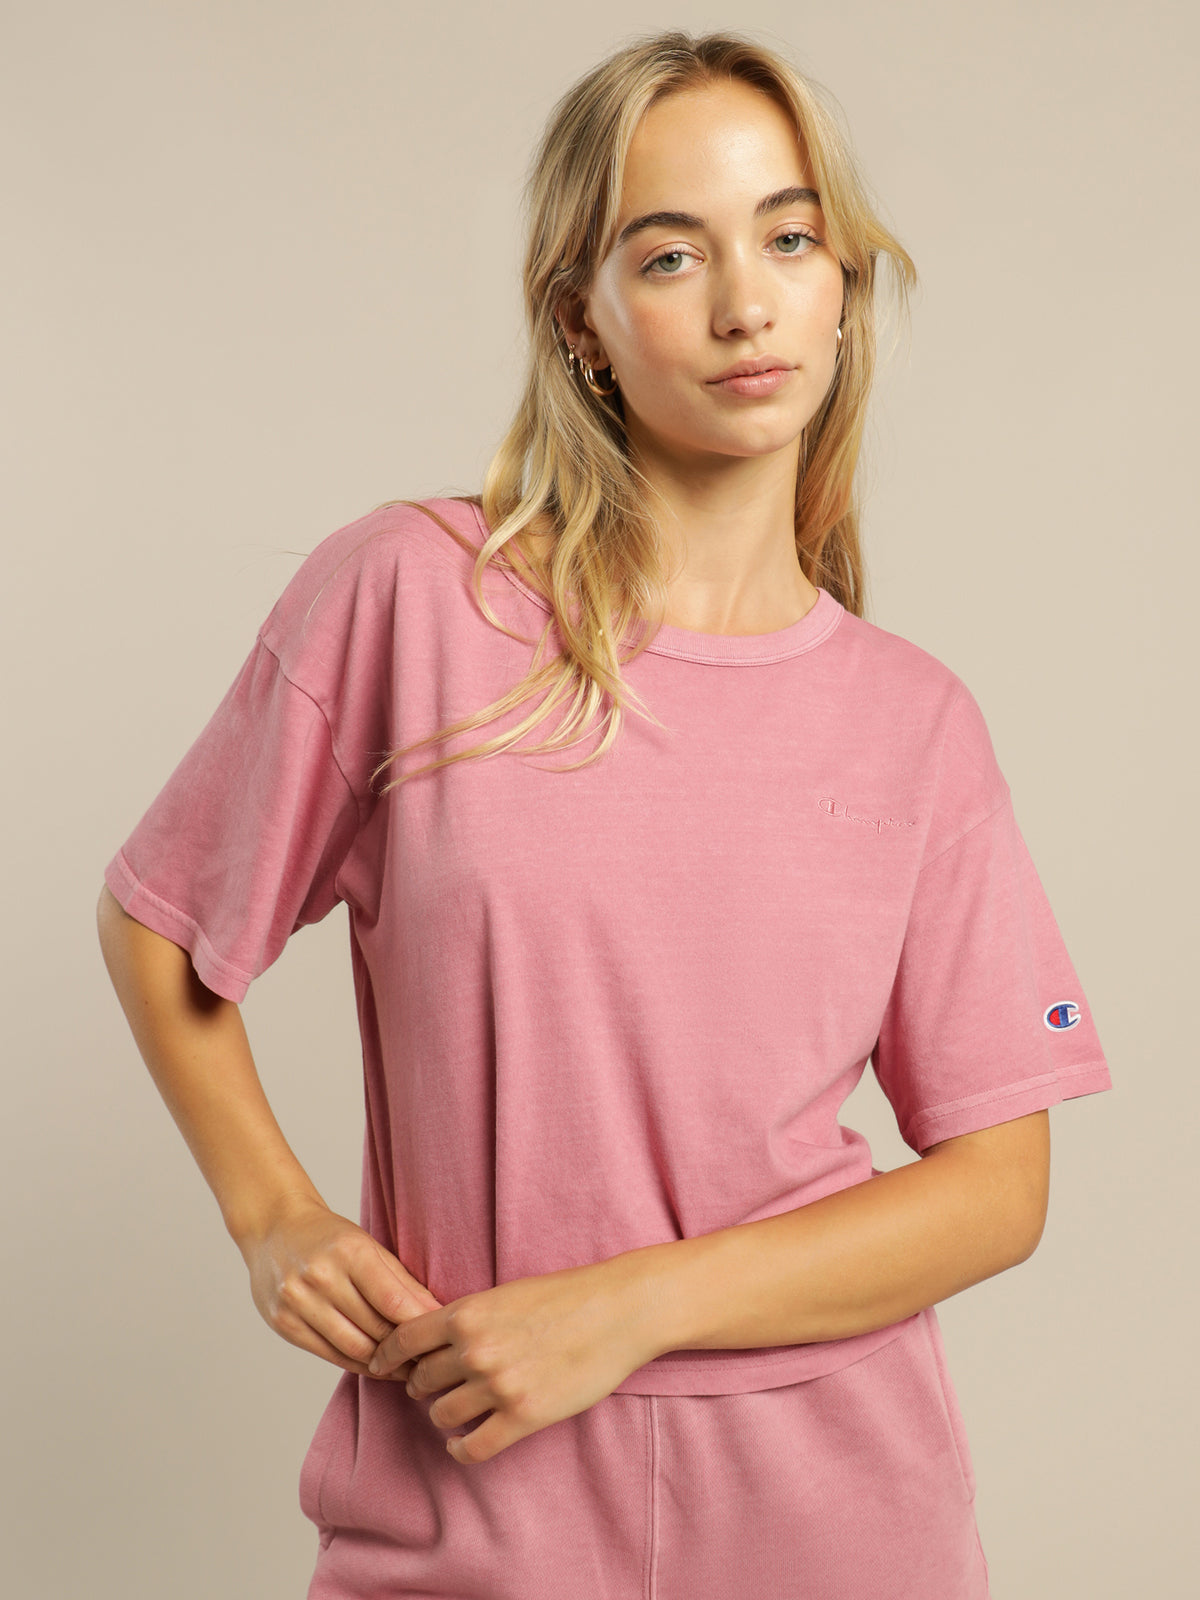 JR Vintage Dye T-Shirt in Terracotta Pink